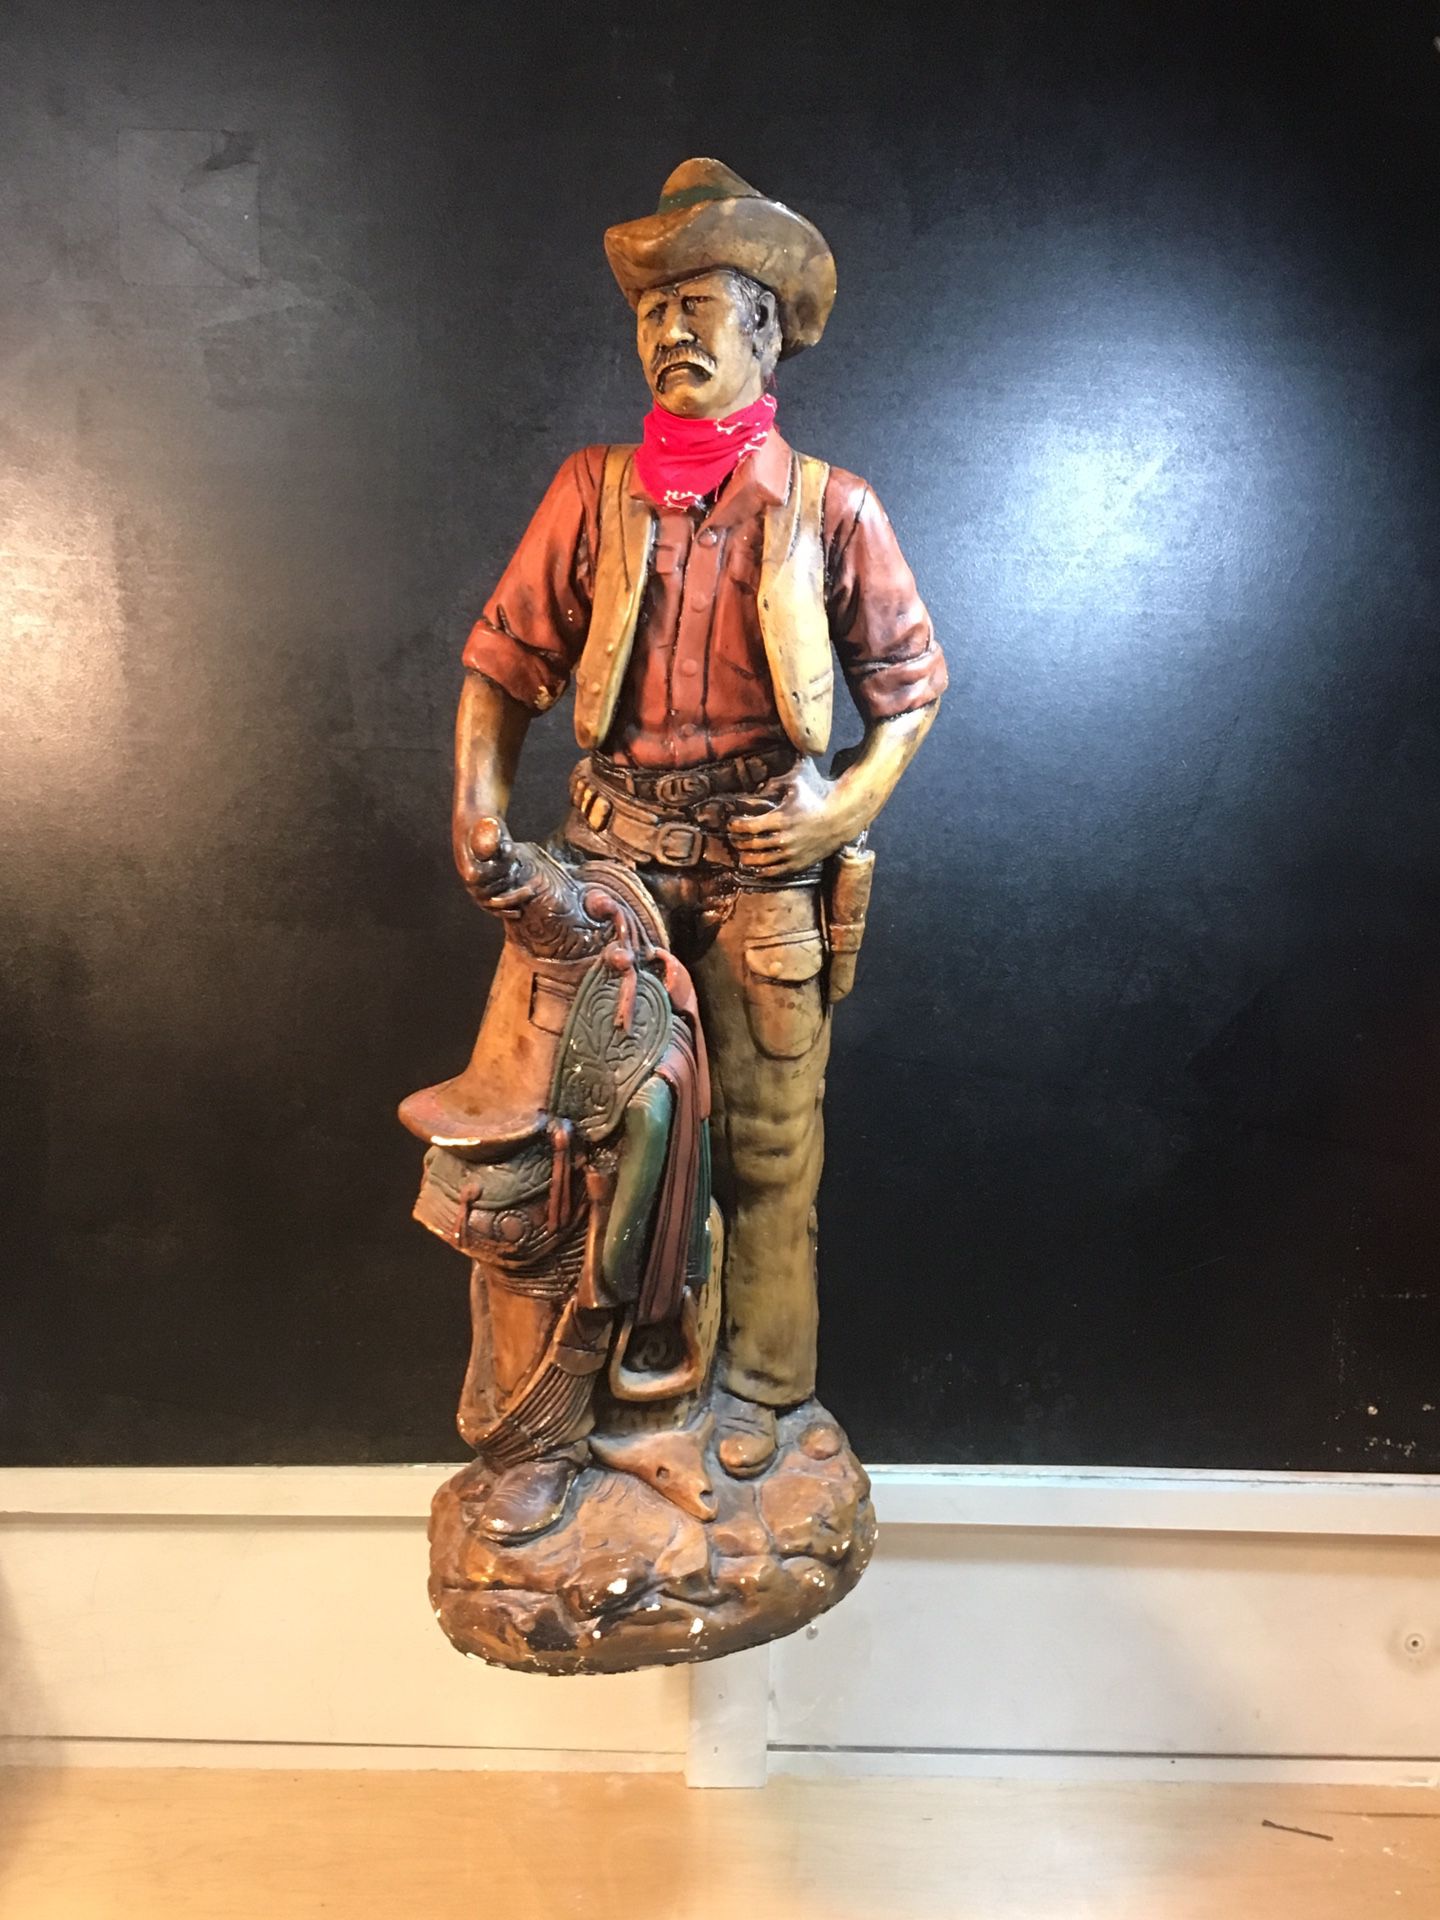 Ceramic Mexican cowboy statue.